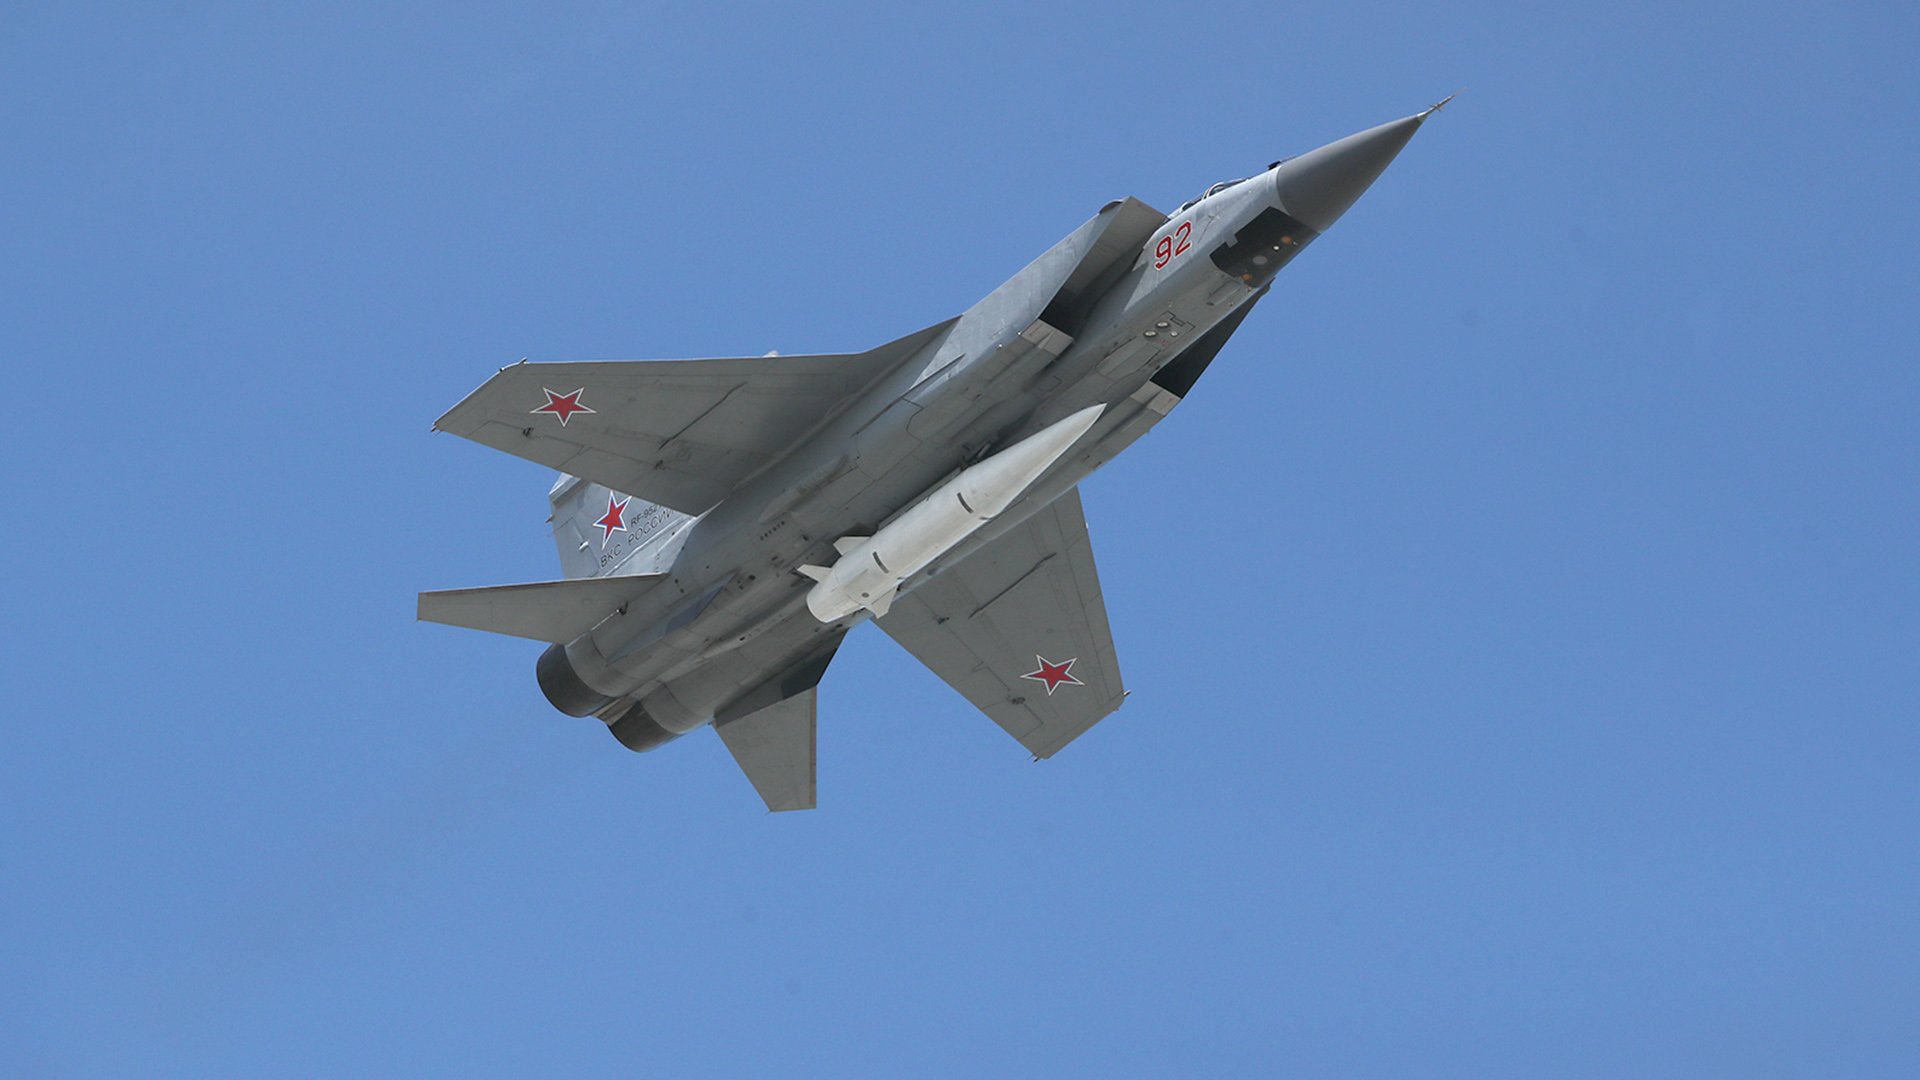 MiG-31K-Kampfflugzeug, das Hyperschallraketen "Dagger" tragen kann, fing in Belarus Feuer